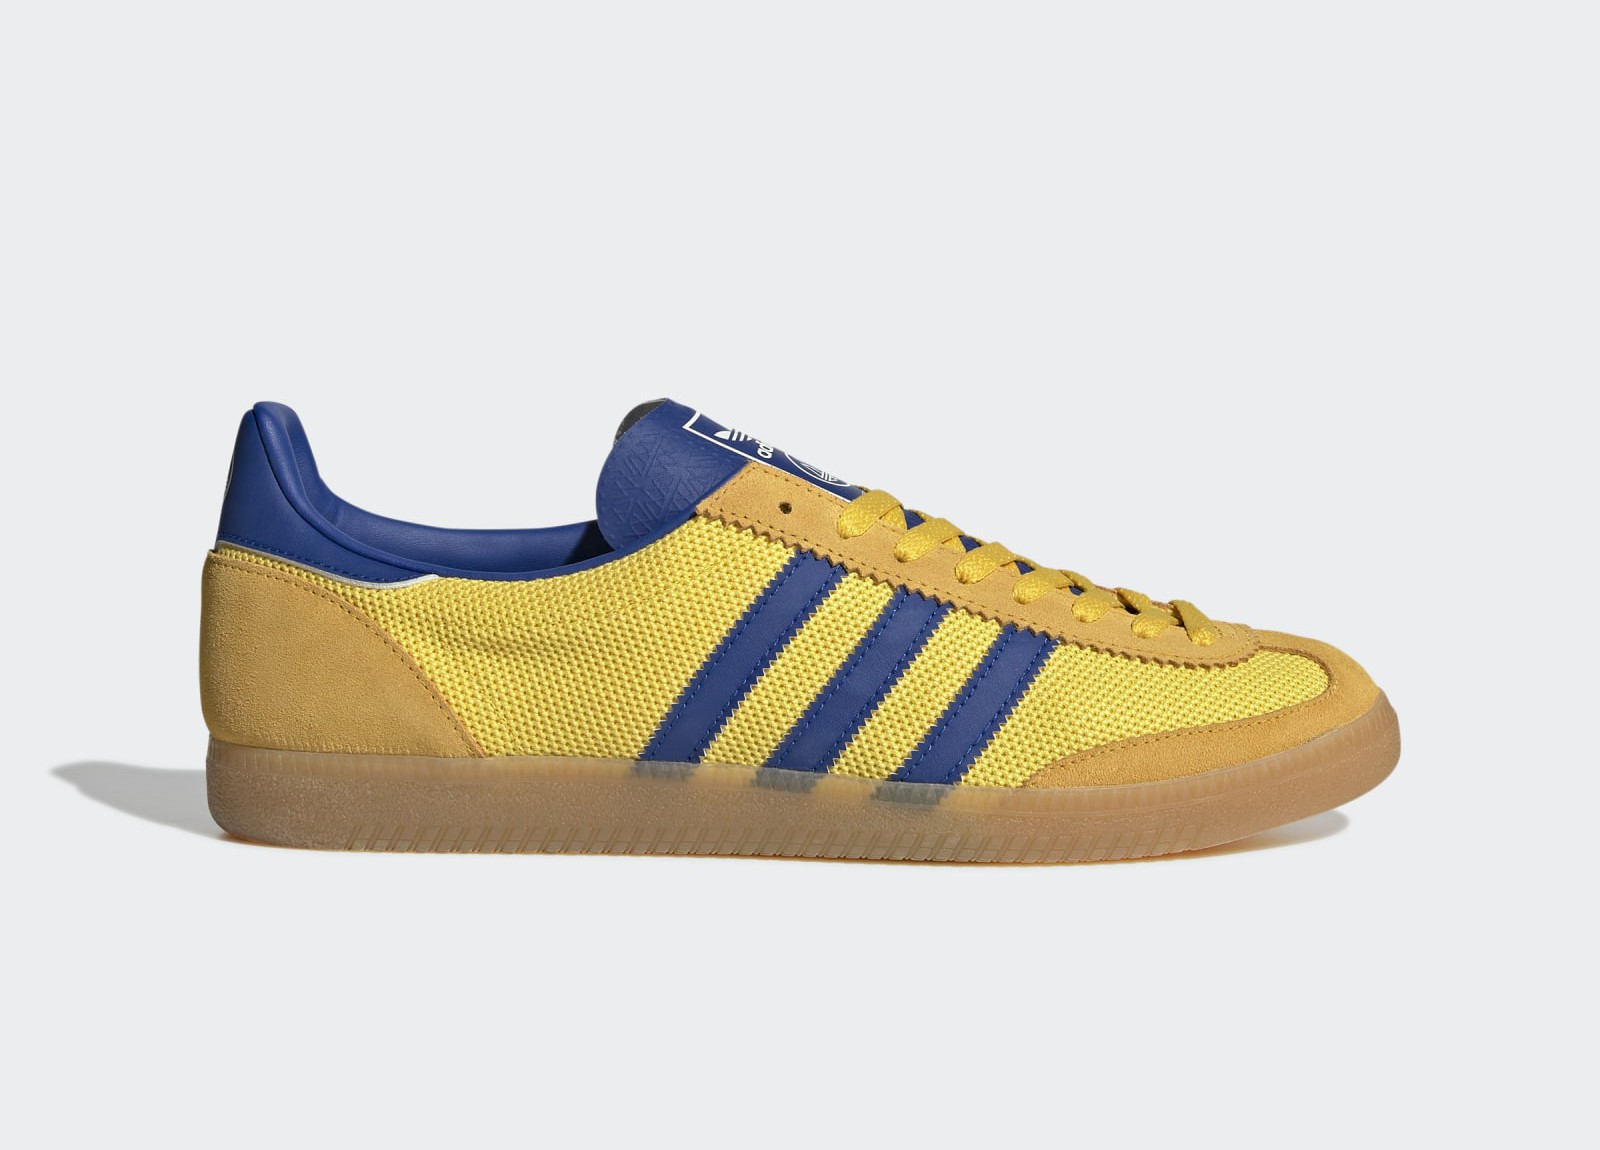 Adidas SPZL Malmo Net
Yellow / Blue